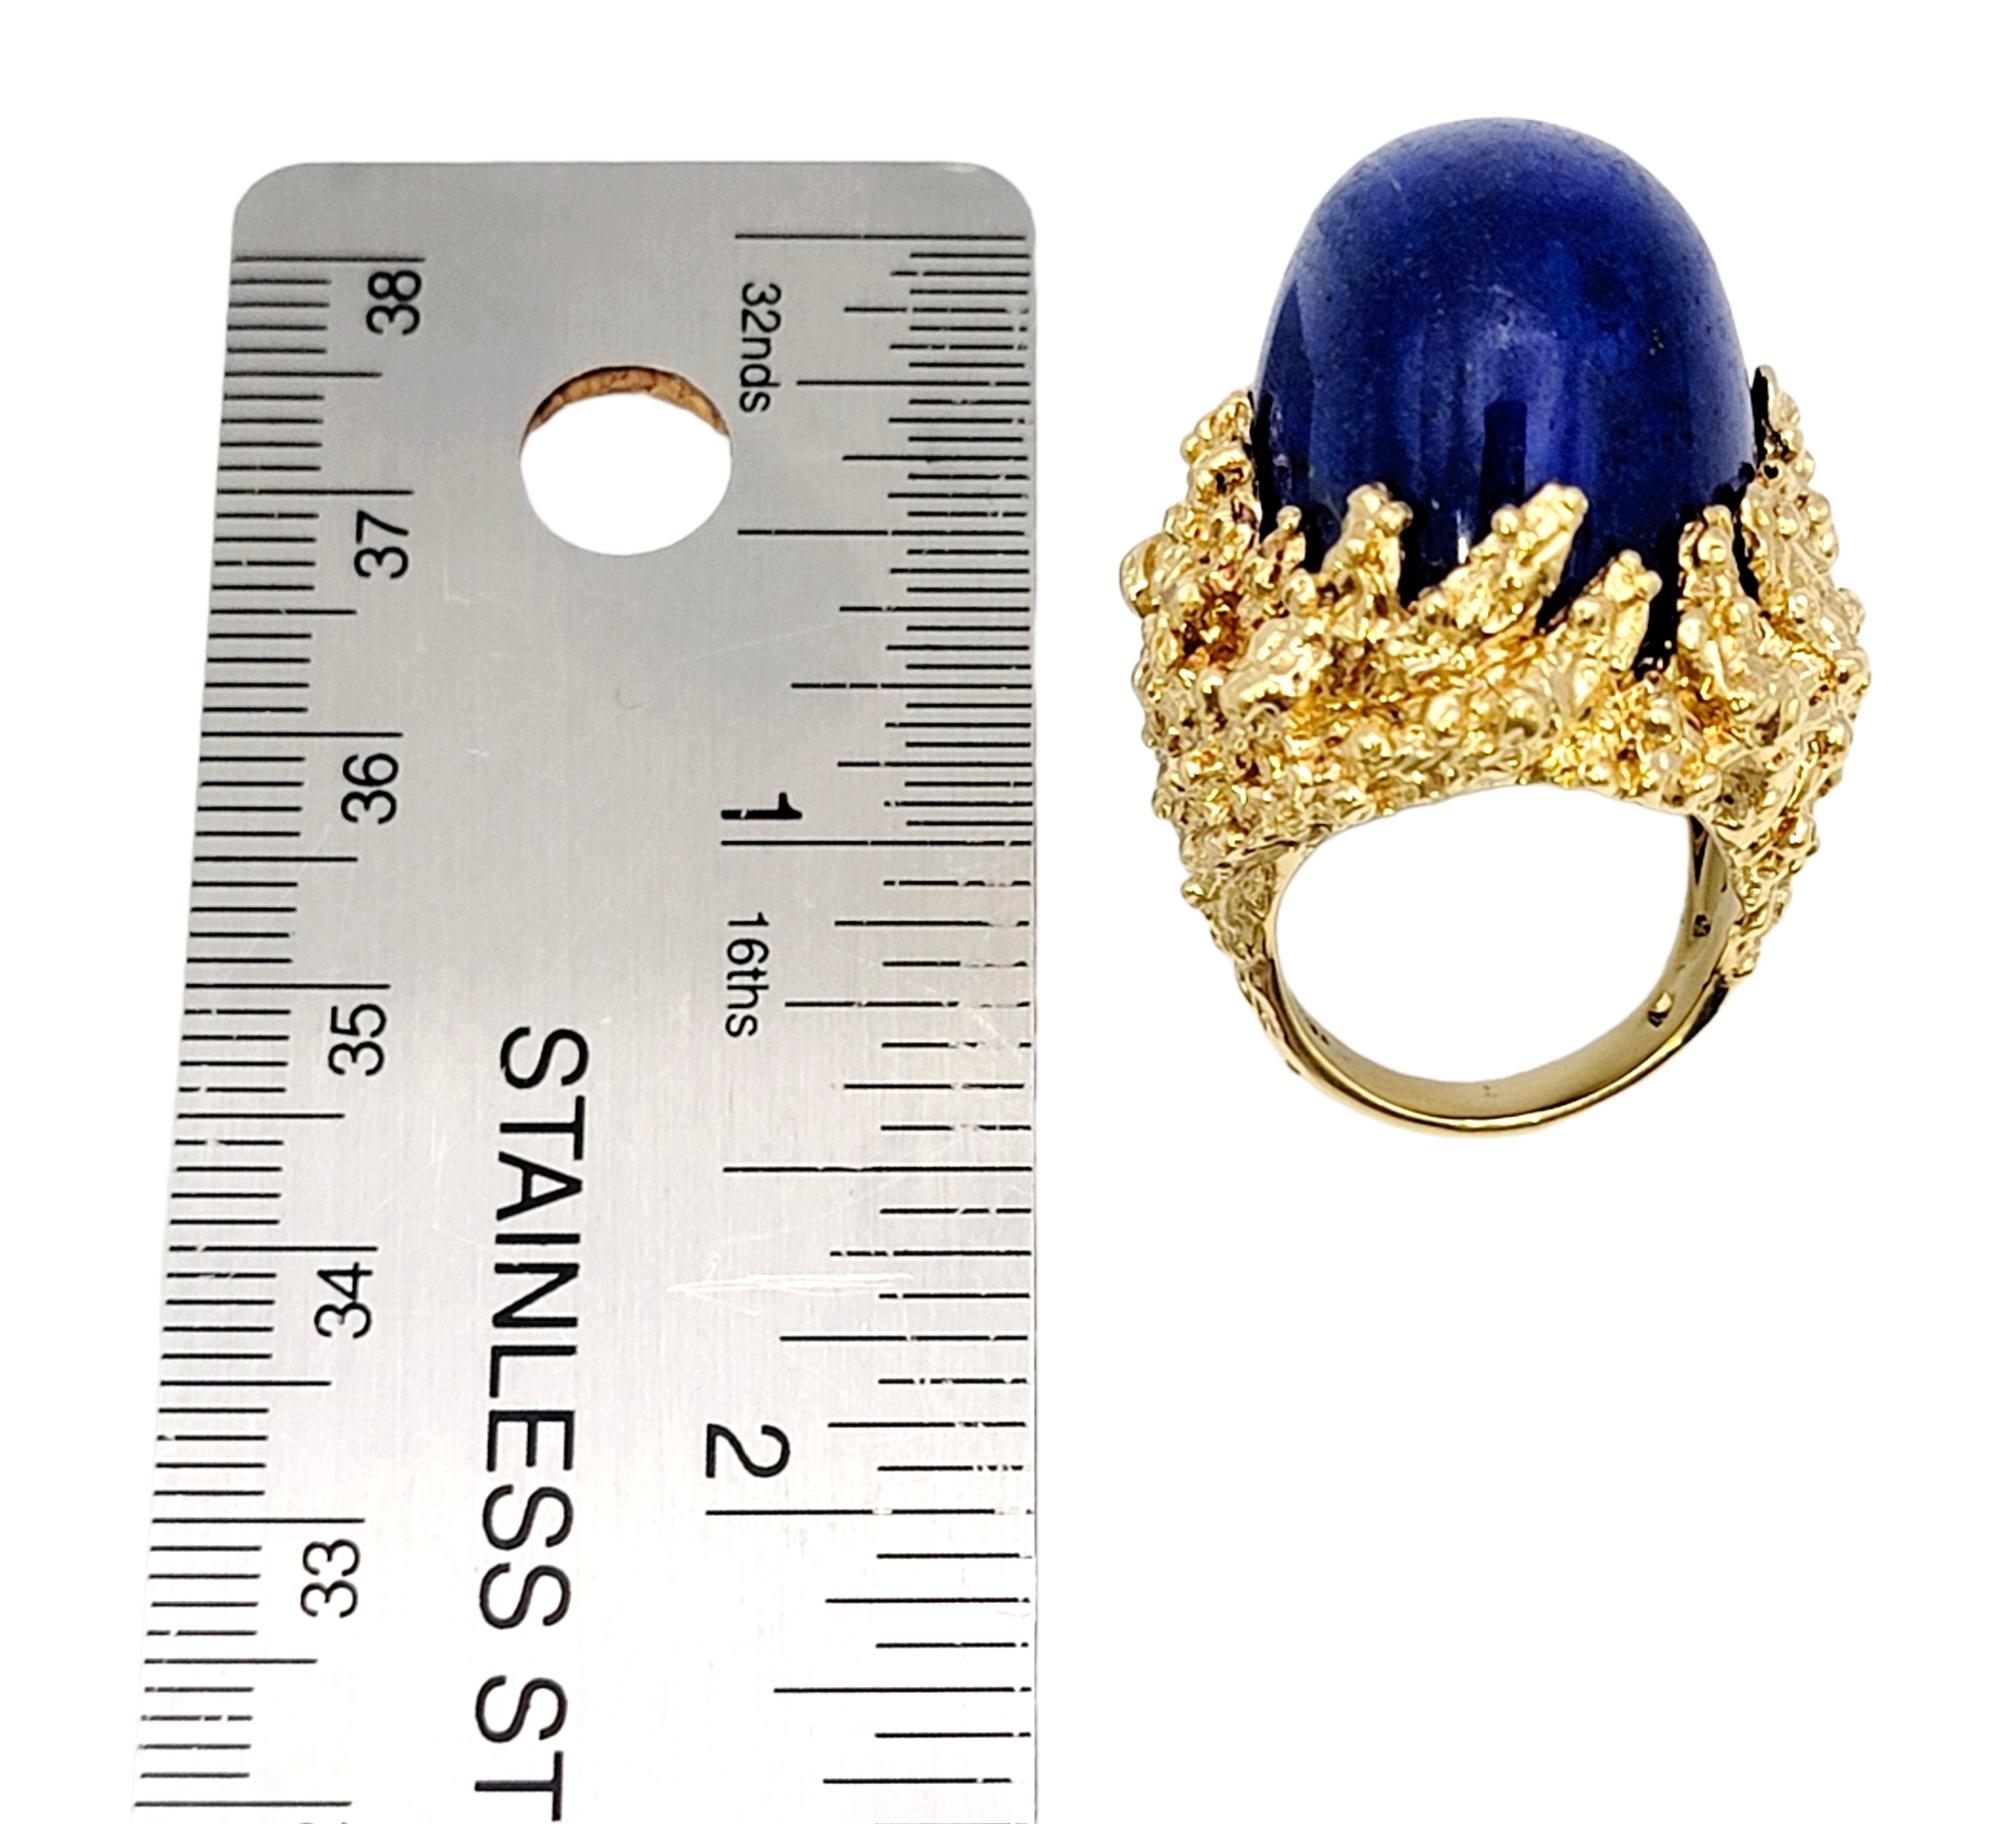 48.90 Carat Oval Cabochon Lapis Lazuli Coral Motif 18 Karat Gold Cocktail Ring 14